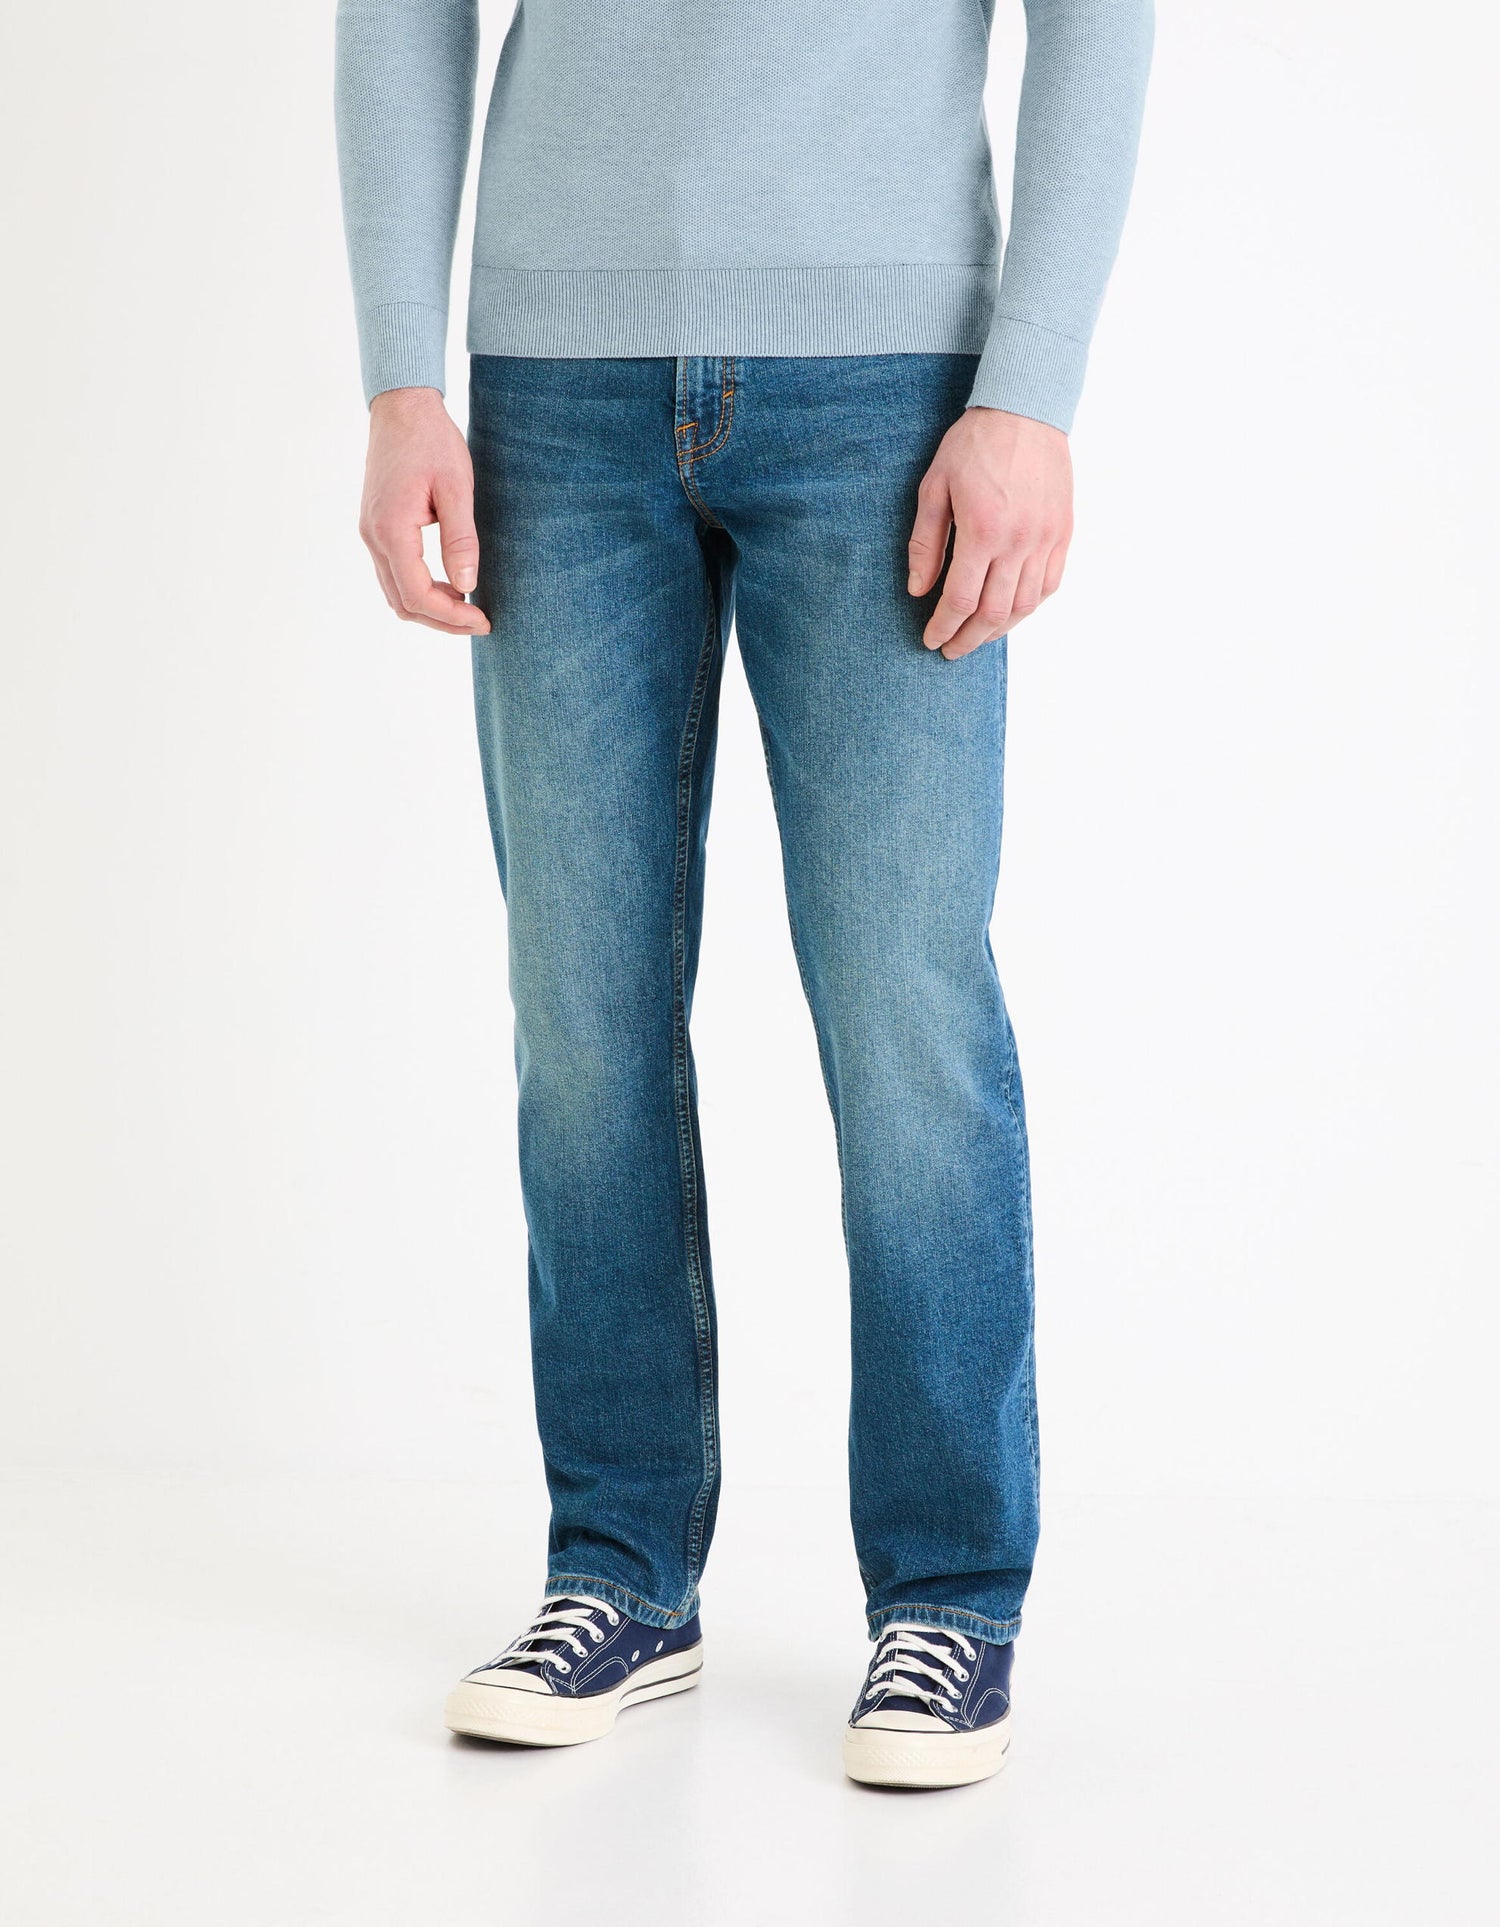 Regular C5 Stretch Jeans 3 Lengths_REGULAR3L_DOUBLE STONE_03